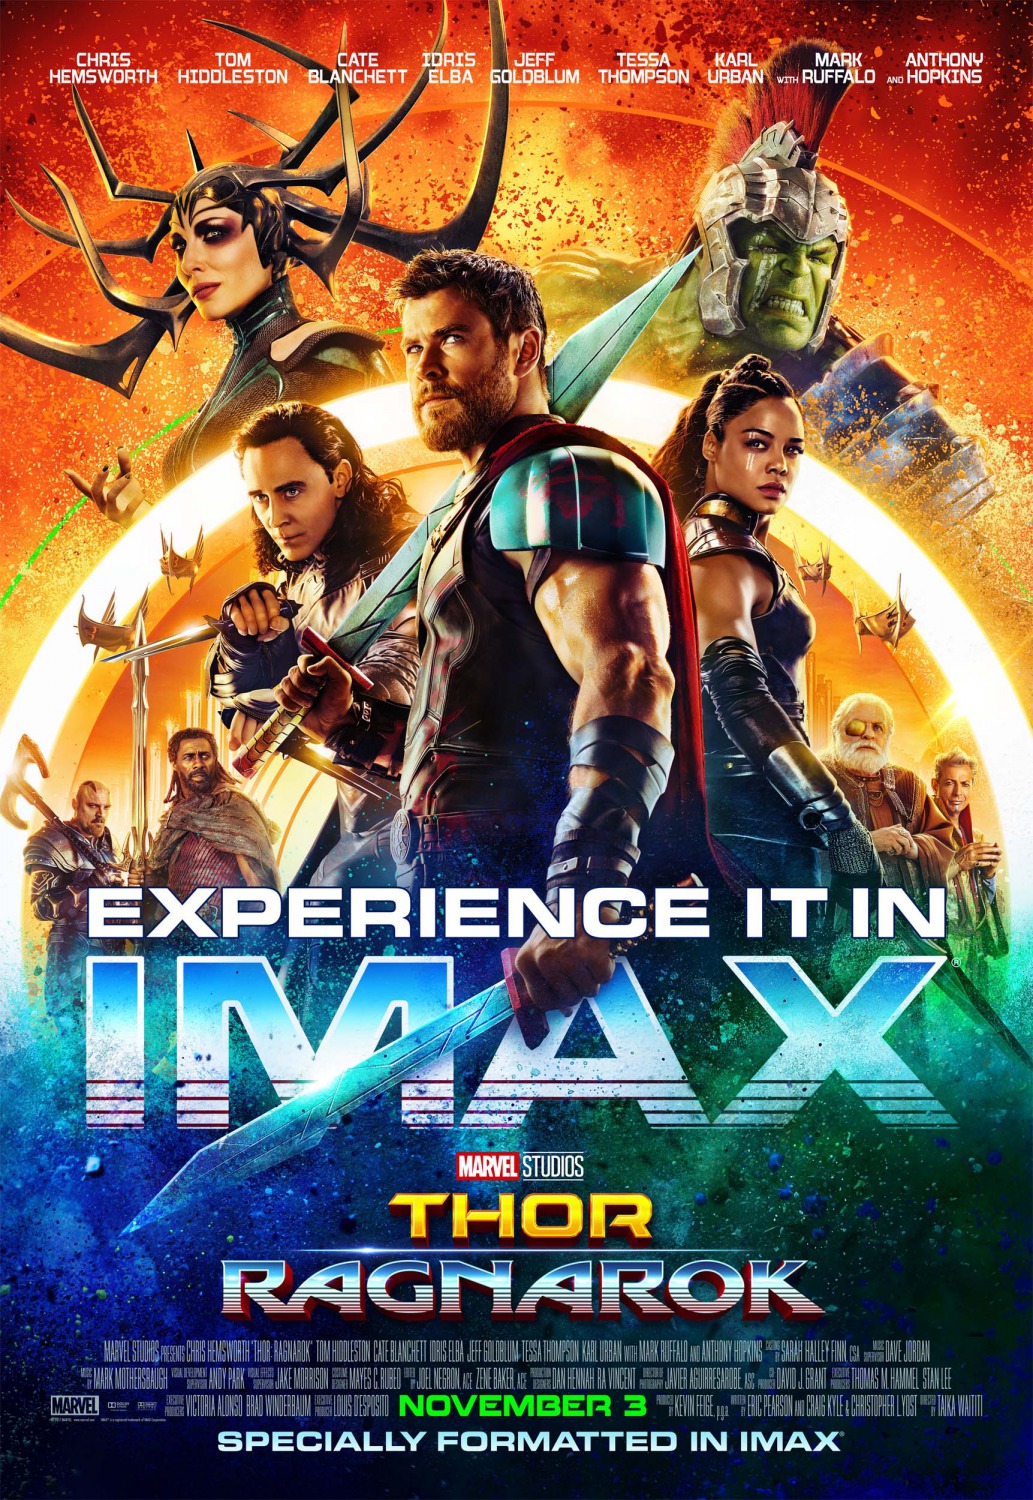 Thor Ragnarok 2017 Movie Wallpapers